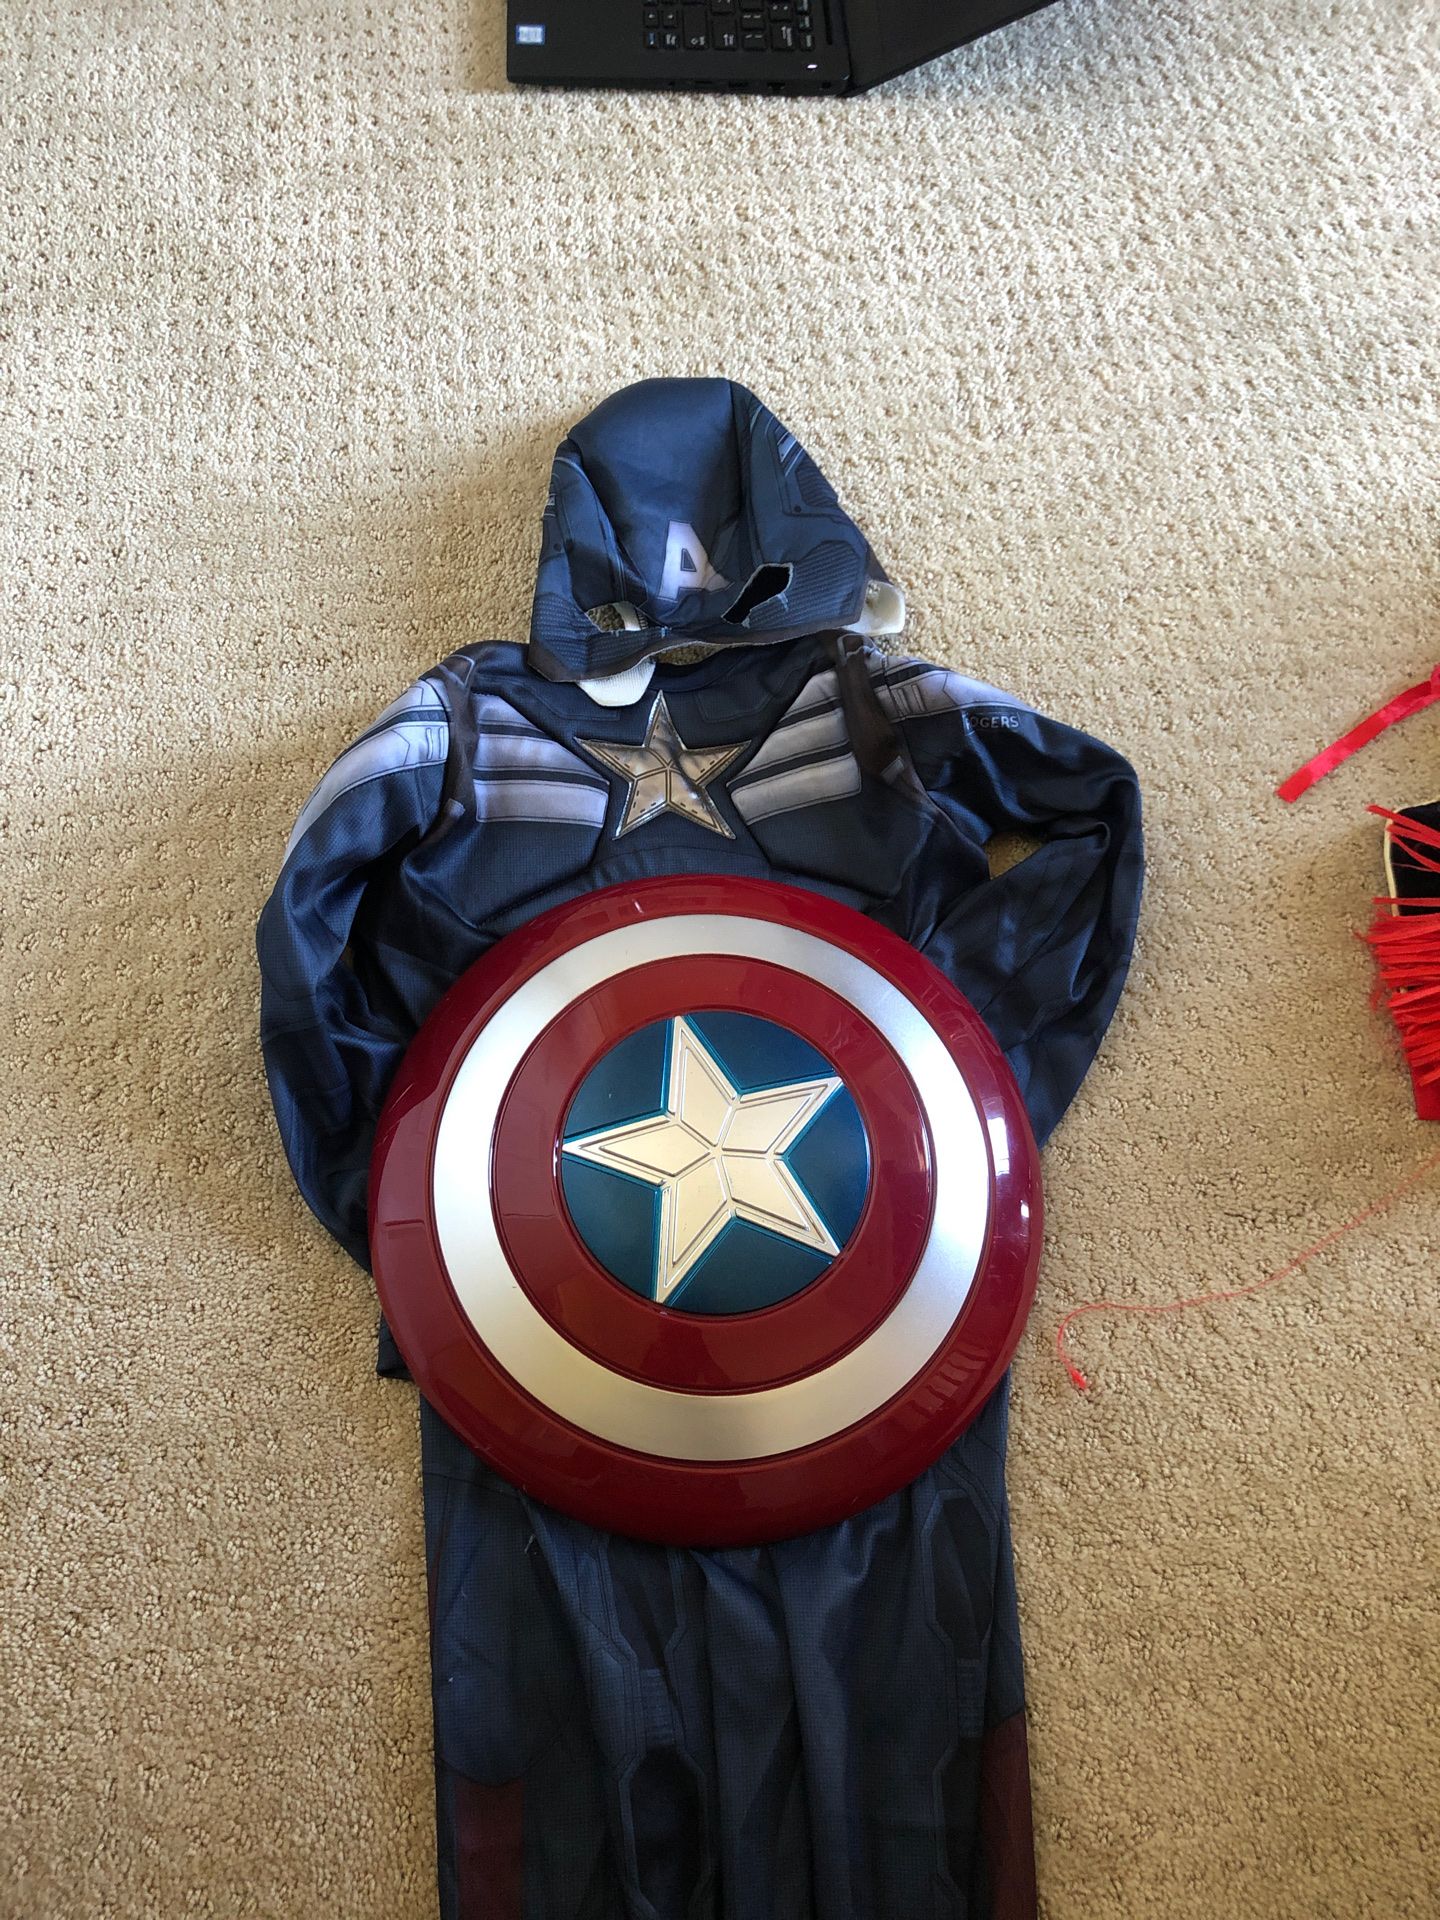 Marvel captain America kids costume 4 - 6 years